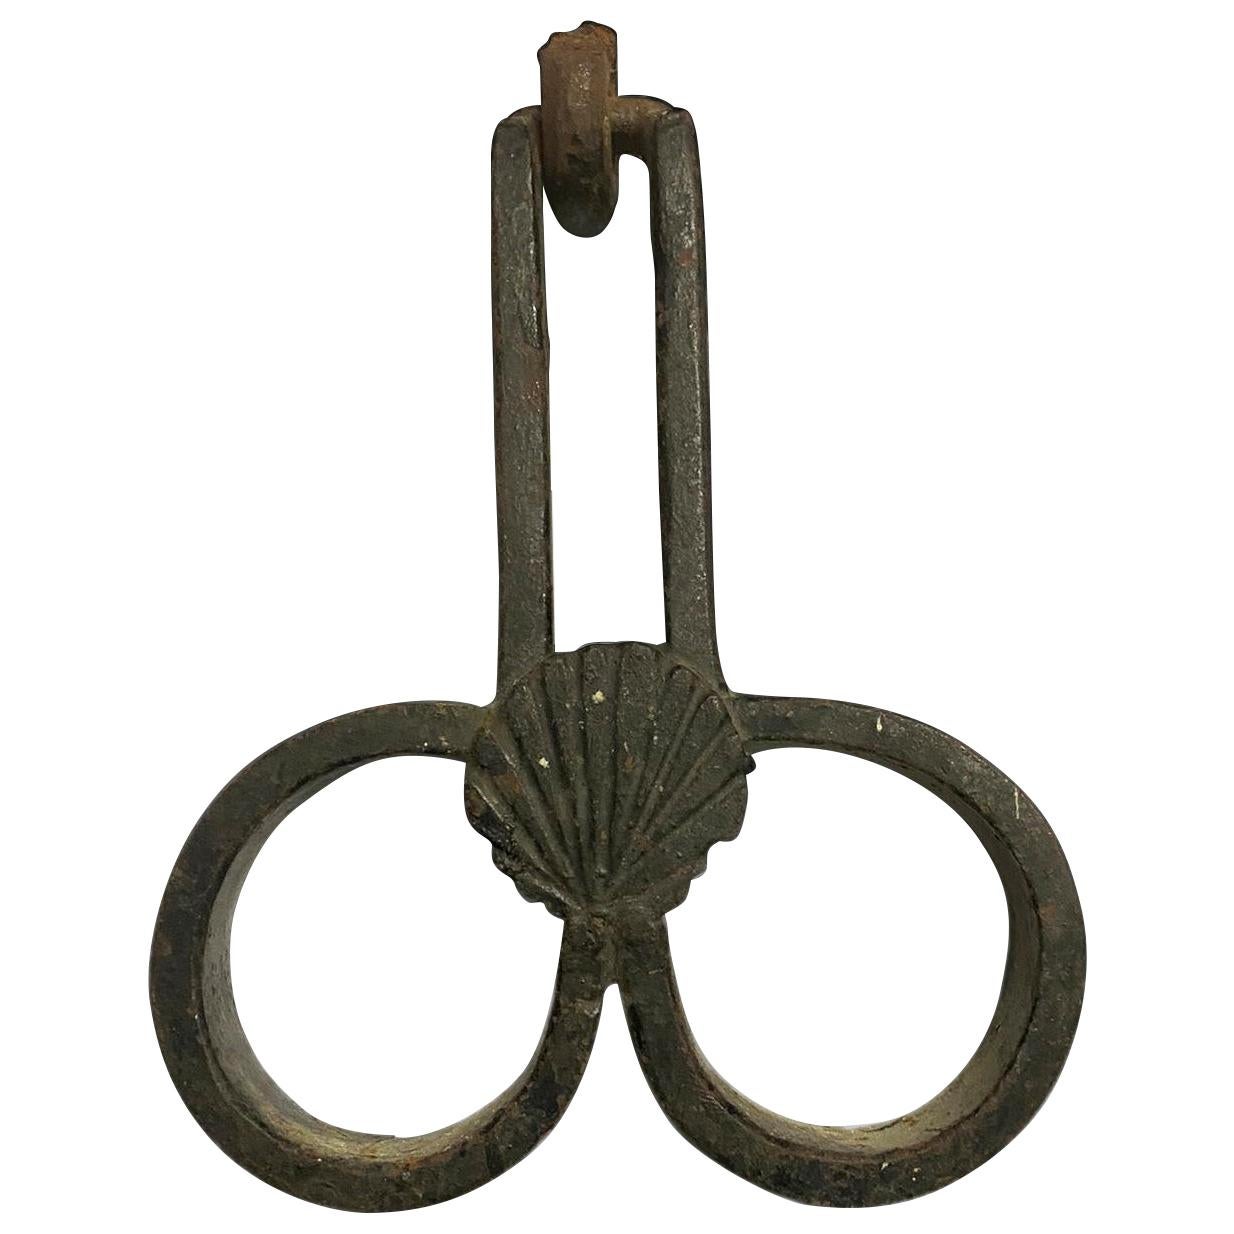 Renaissance Wrought Iron Handle, 16th Century